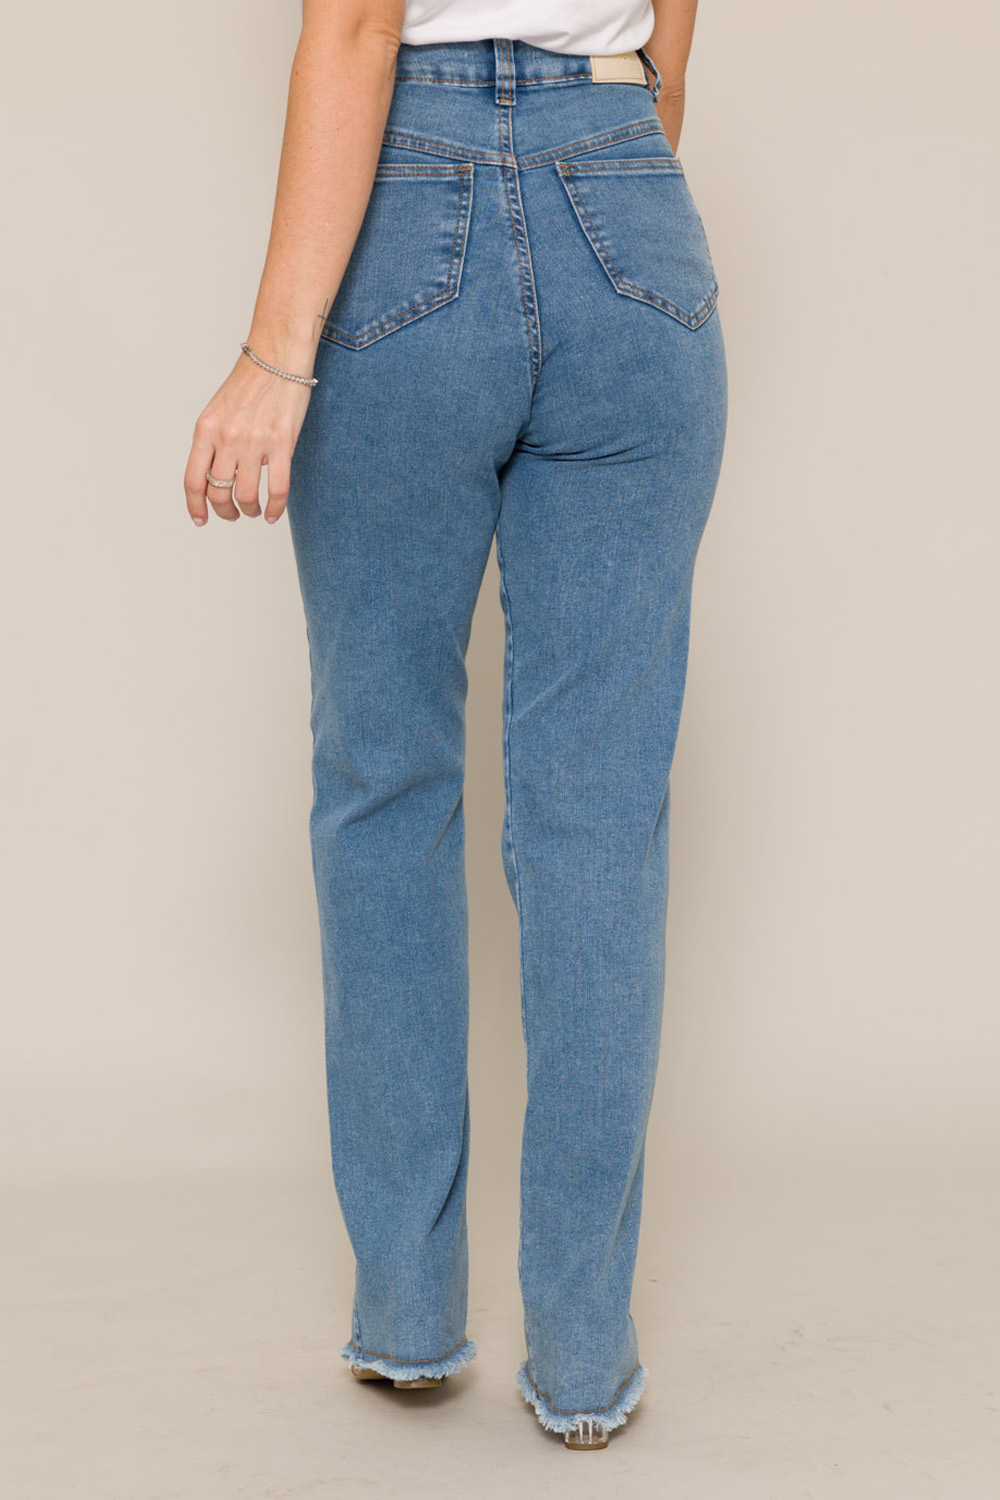 Calça Jeans Reta Basic 11676 - Jeans Médio